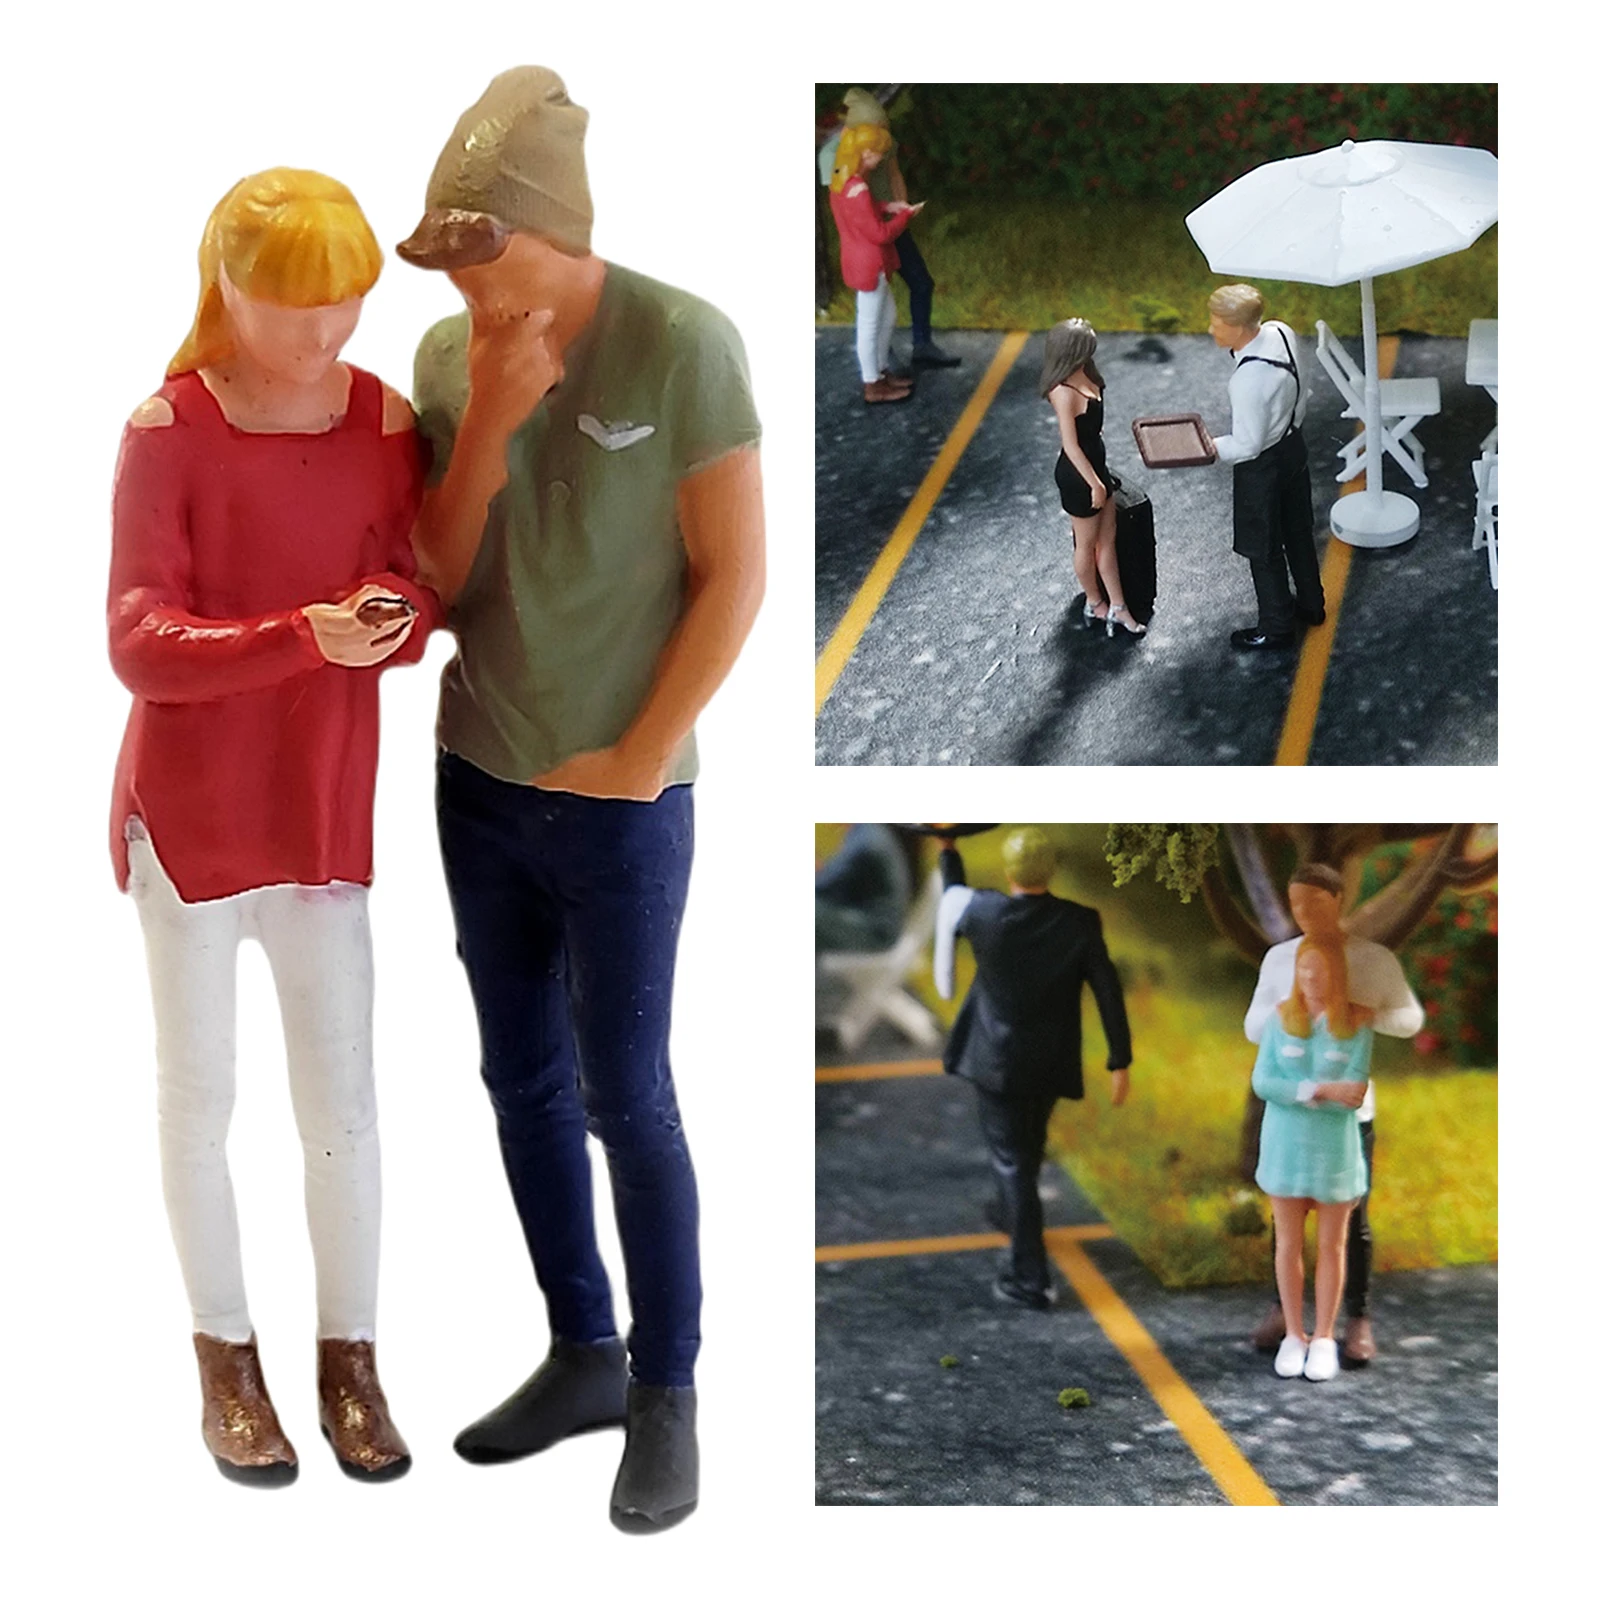 1:64th Figures Model Couple People for Miniature Scenes, Diorama Decoration Accessories